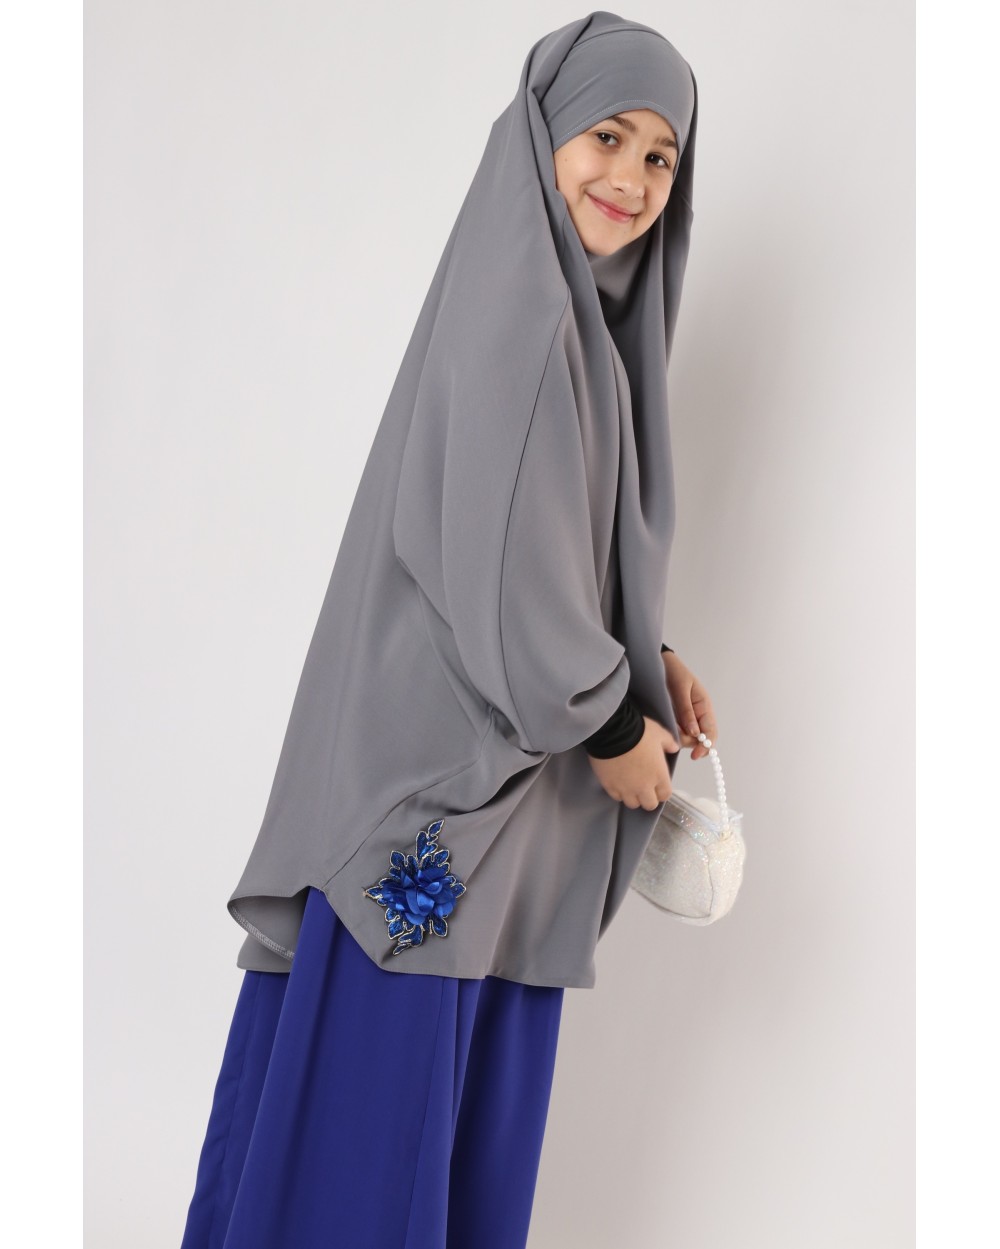 Jilbab child with skirt Mayssane